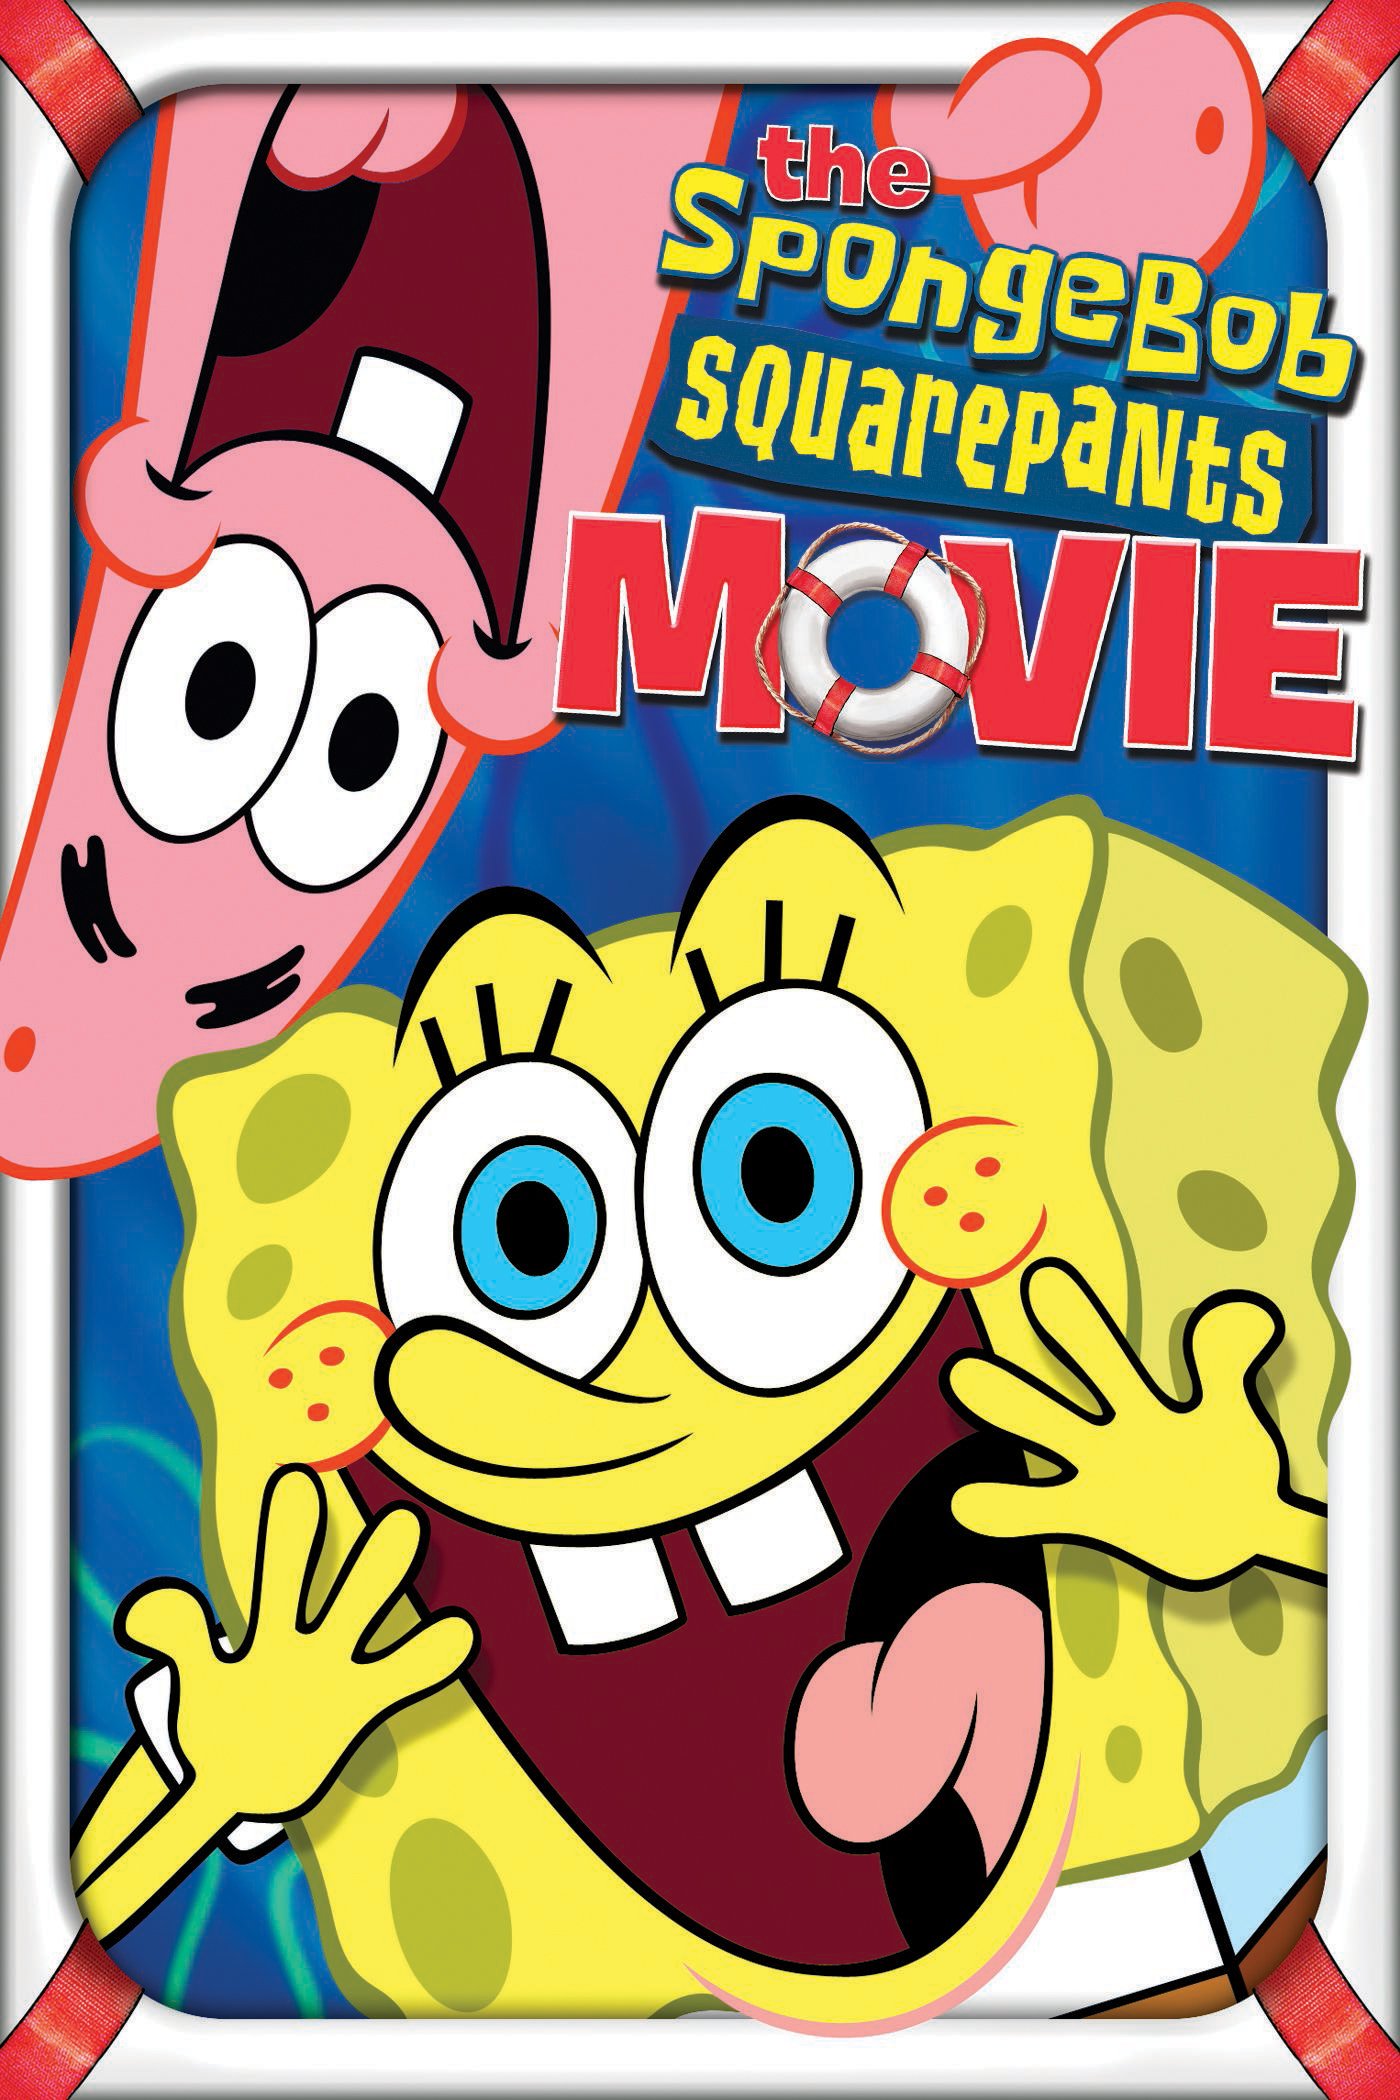 Amazon Prime Digital HD $5 Movies (Animated/Kids): SpongeBob SquarePants Movie, South Park, Paw Patrol, Despicable Me and more... $4.98